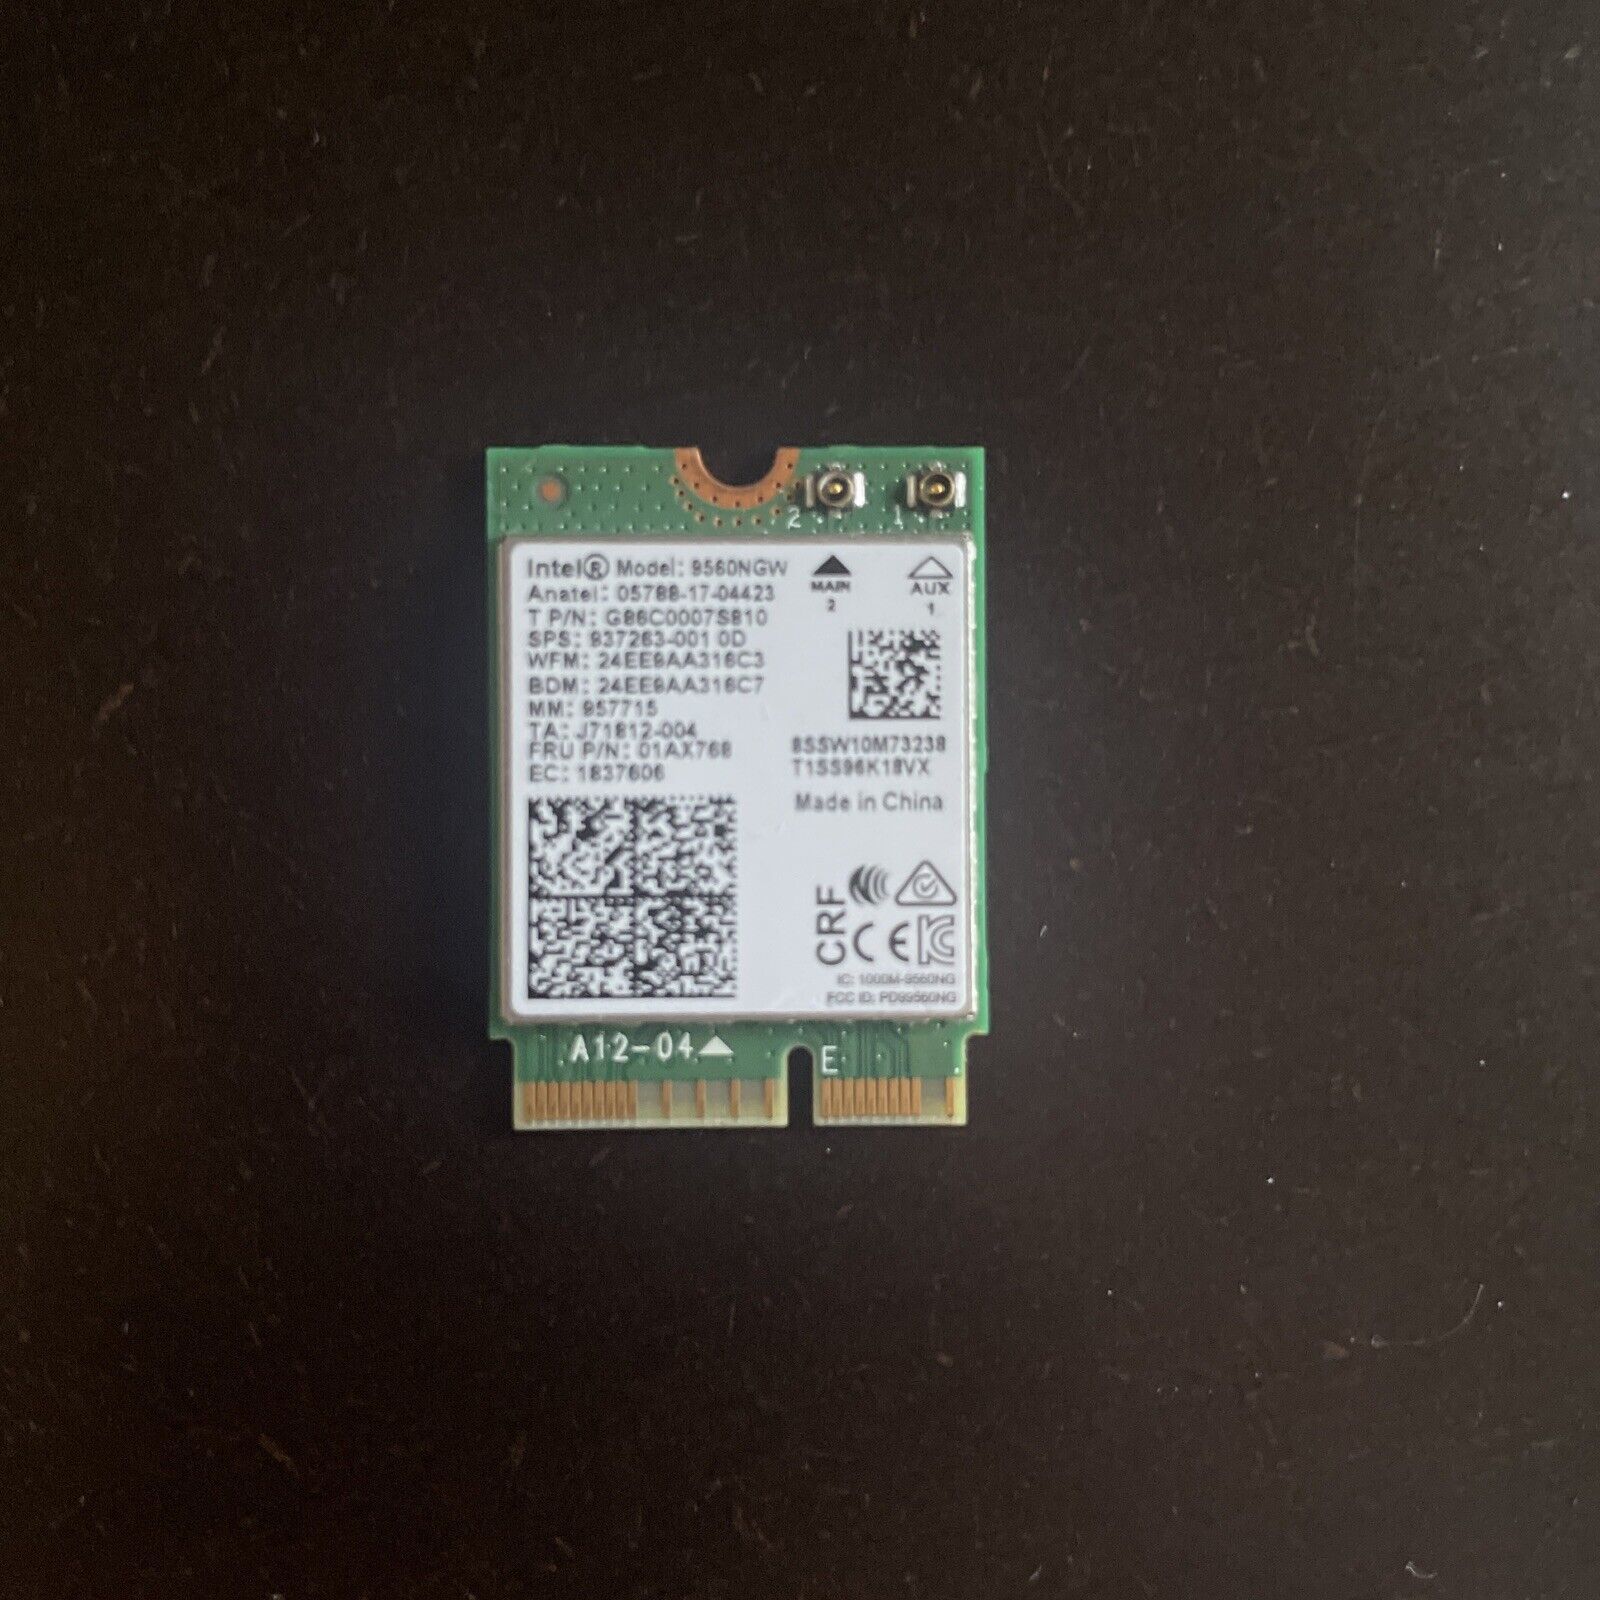 Intel 9560.NGWG.NV Wireless Network Card